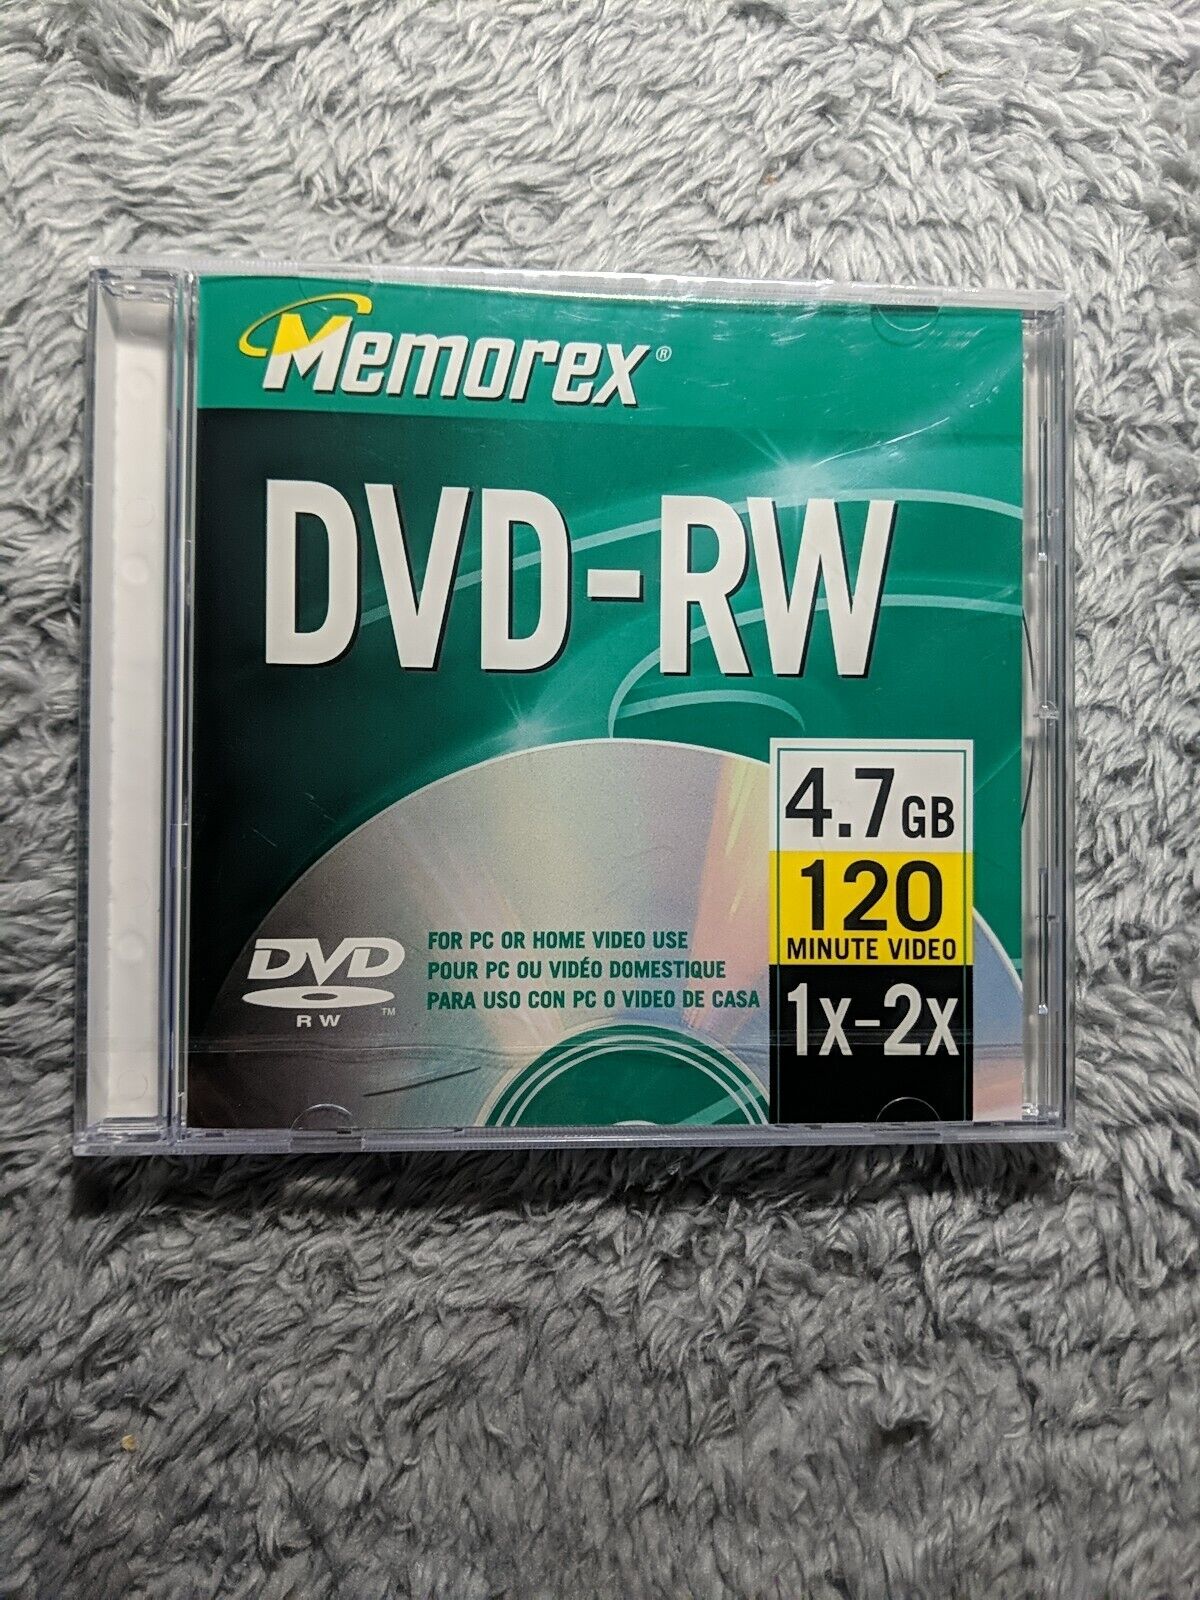 (1)Memorex DVD-RW 4.7GB / 120 minute BRAND NEW SEALED